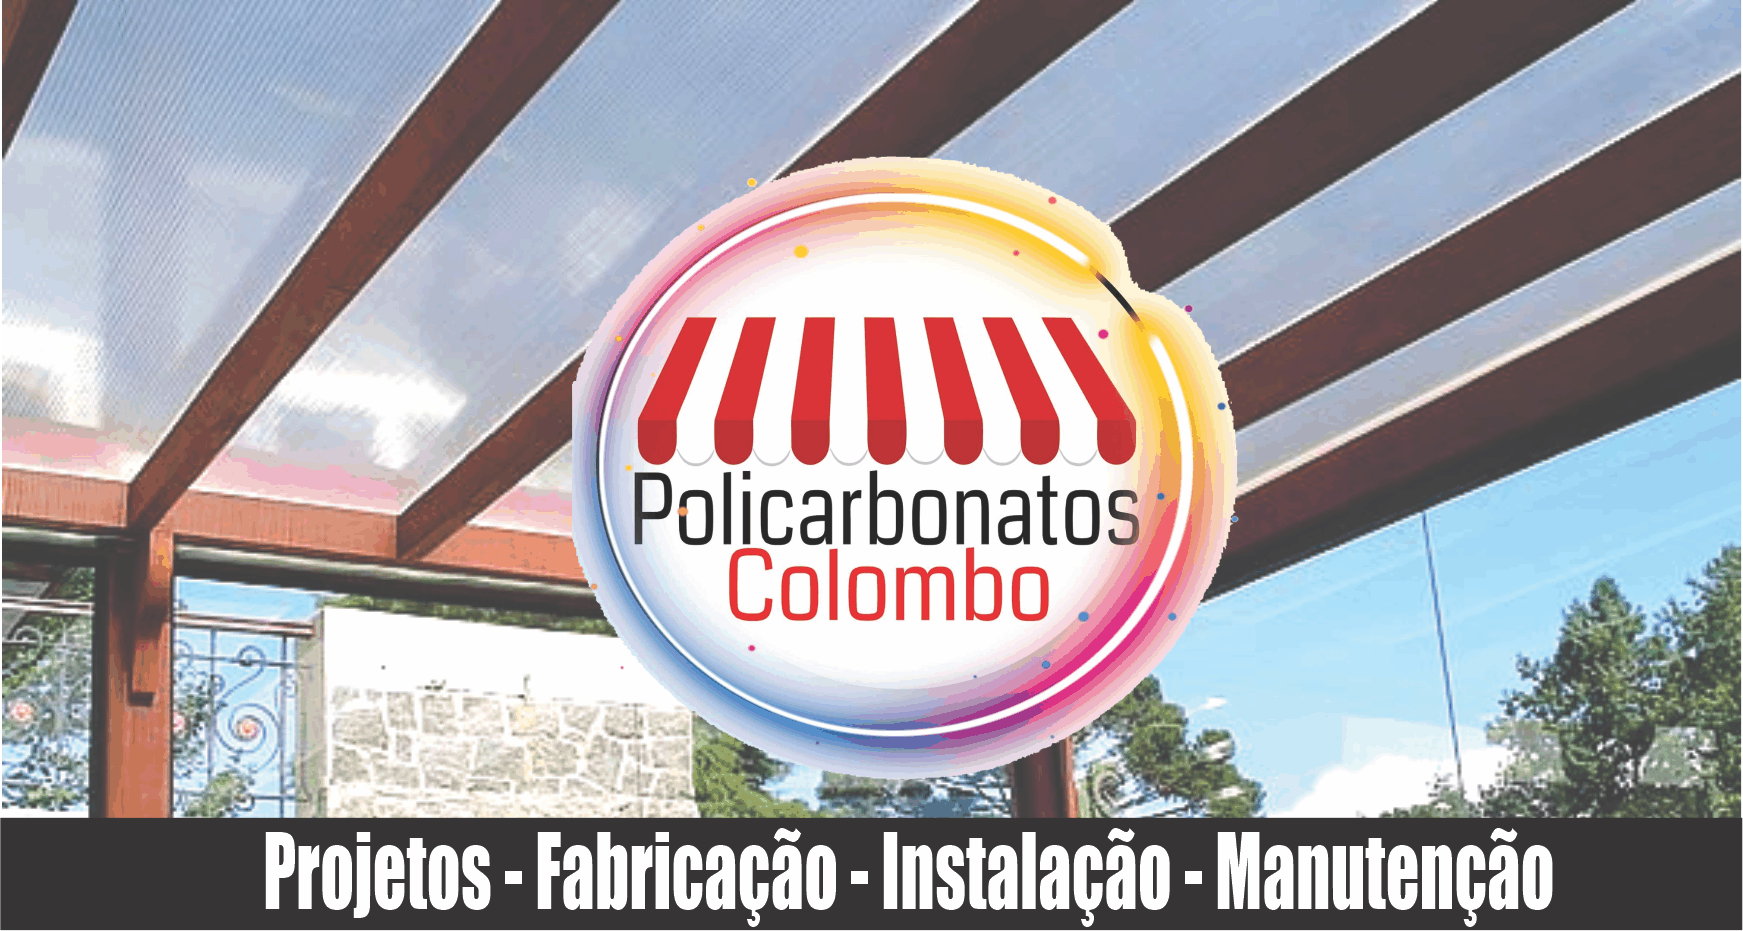  Policarbonatos Colombo      RUA ANTÔNIO BETINARDI, 153, COLOMBO - PR  Fones: (41) 3605-0308 / (41) 99550-6426